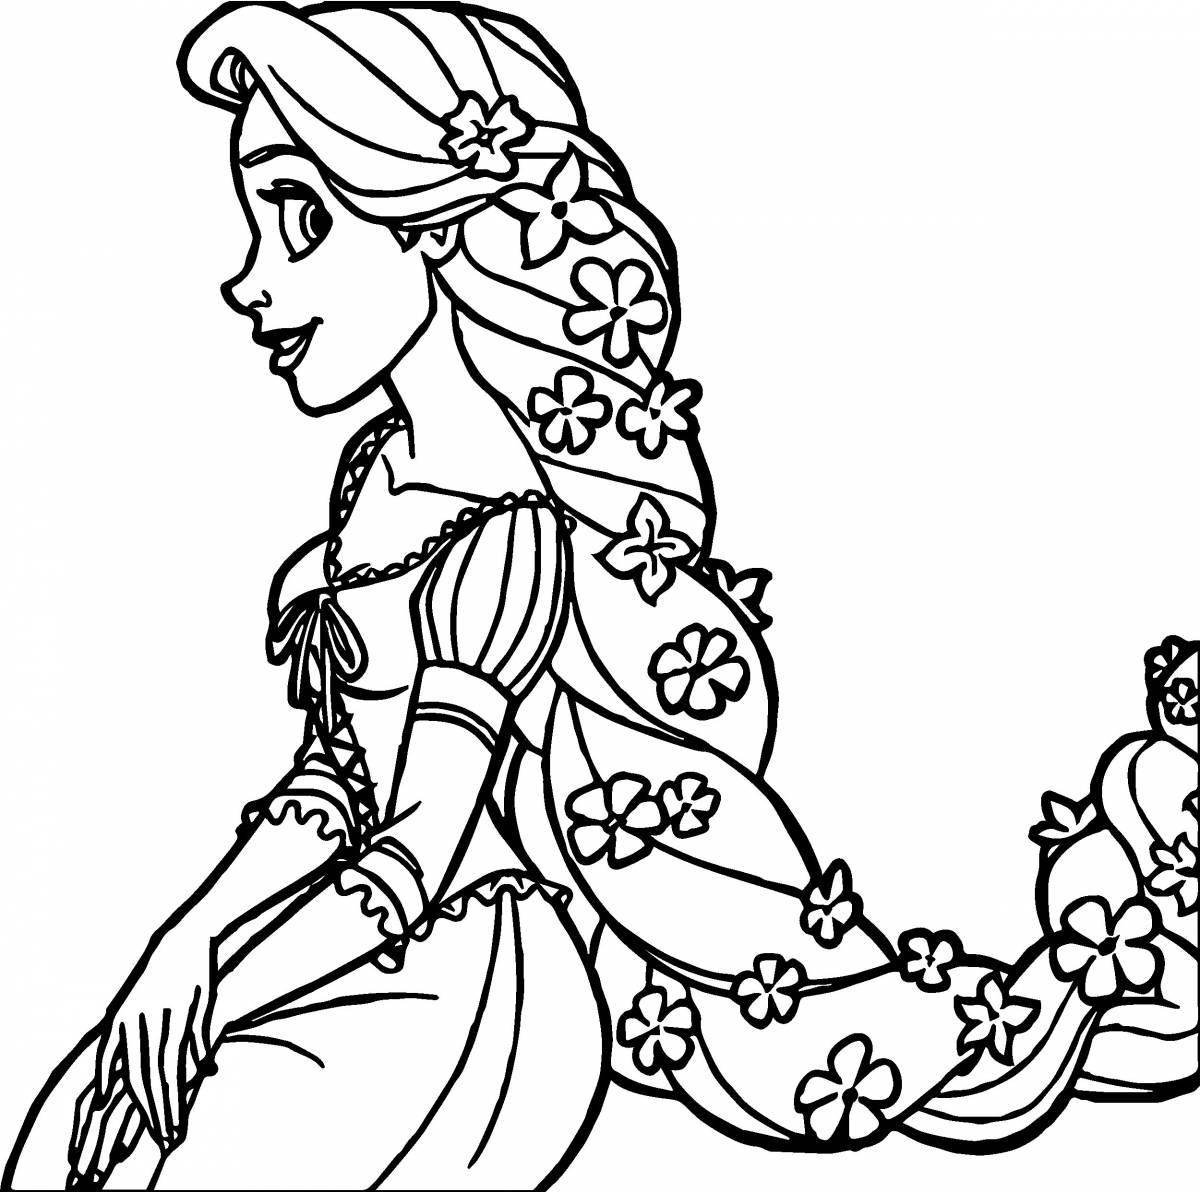 Coloring book bright princess with long hair